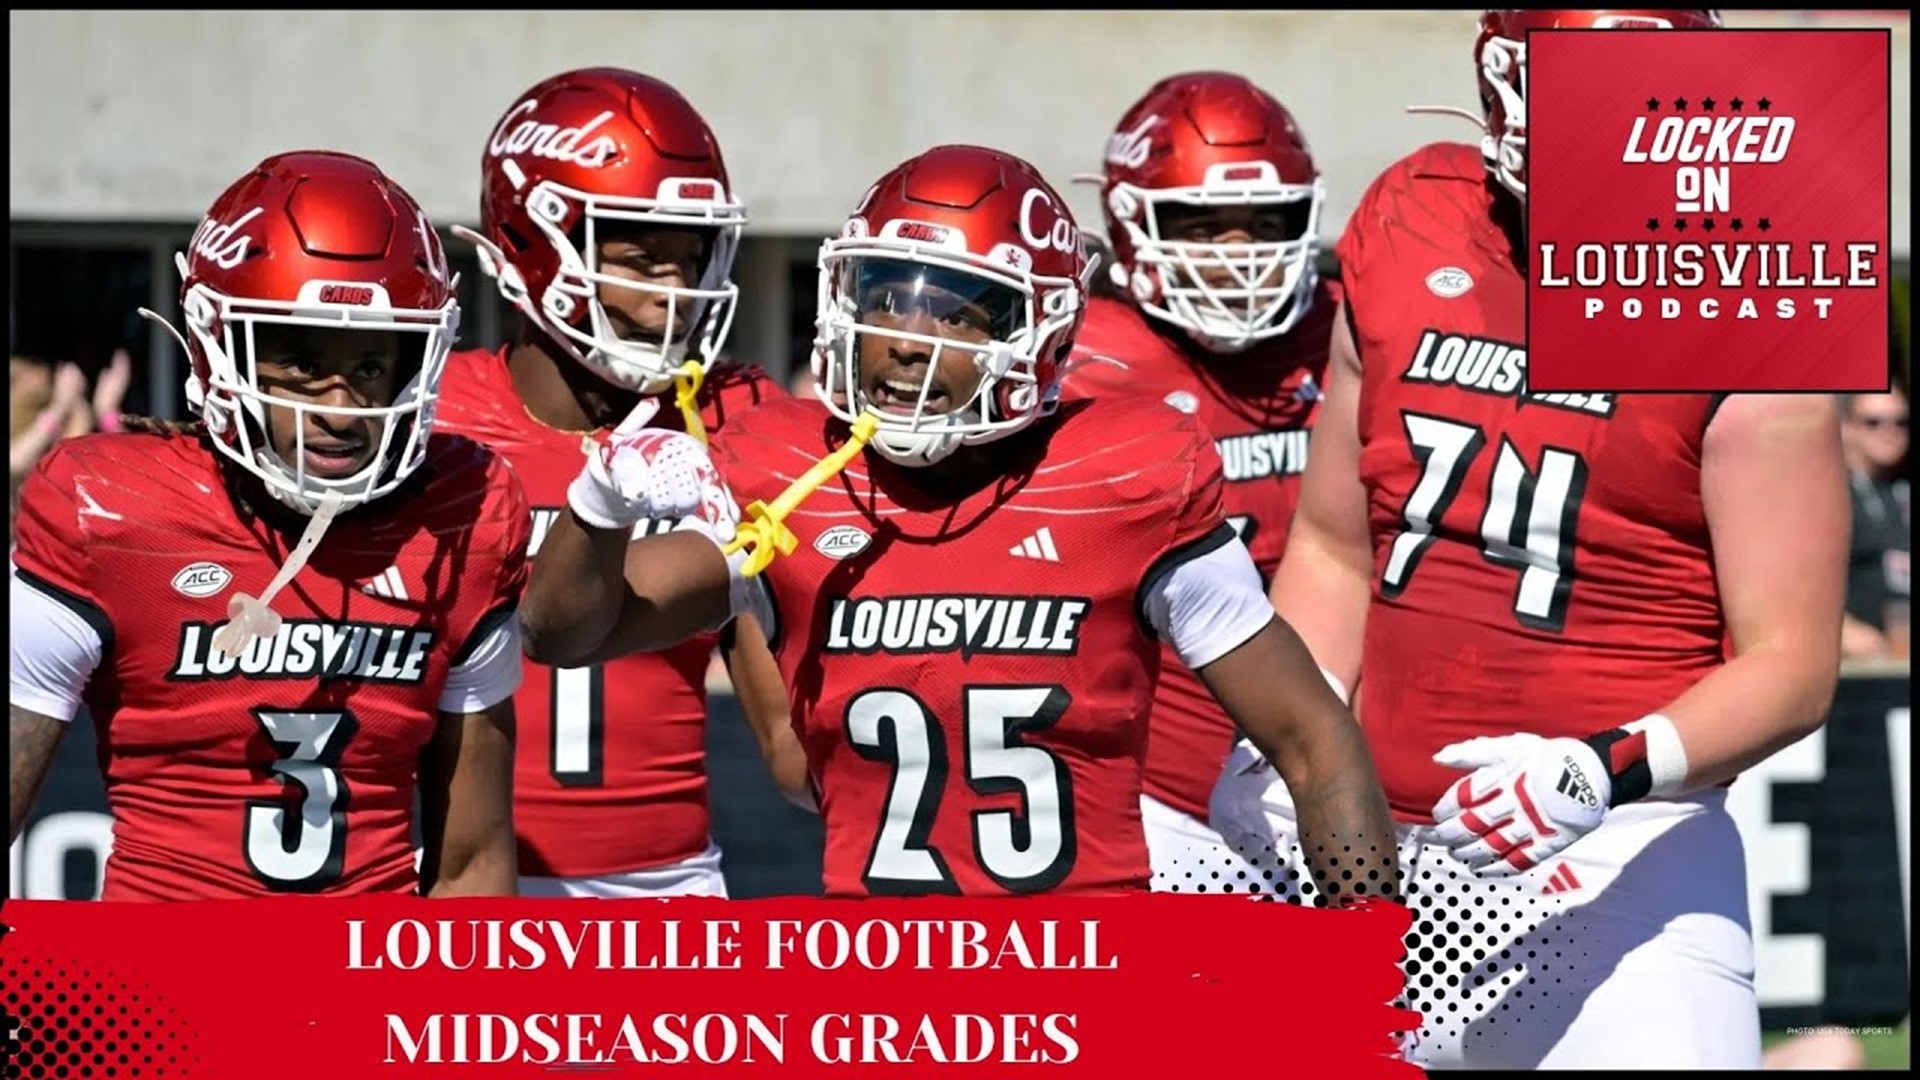 Louisville football: midseason grades and MVPs through the first half of the season...